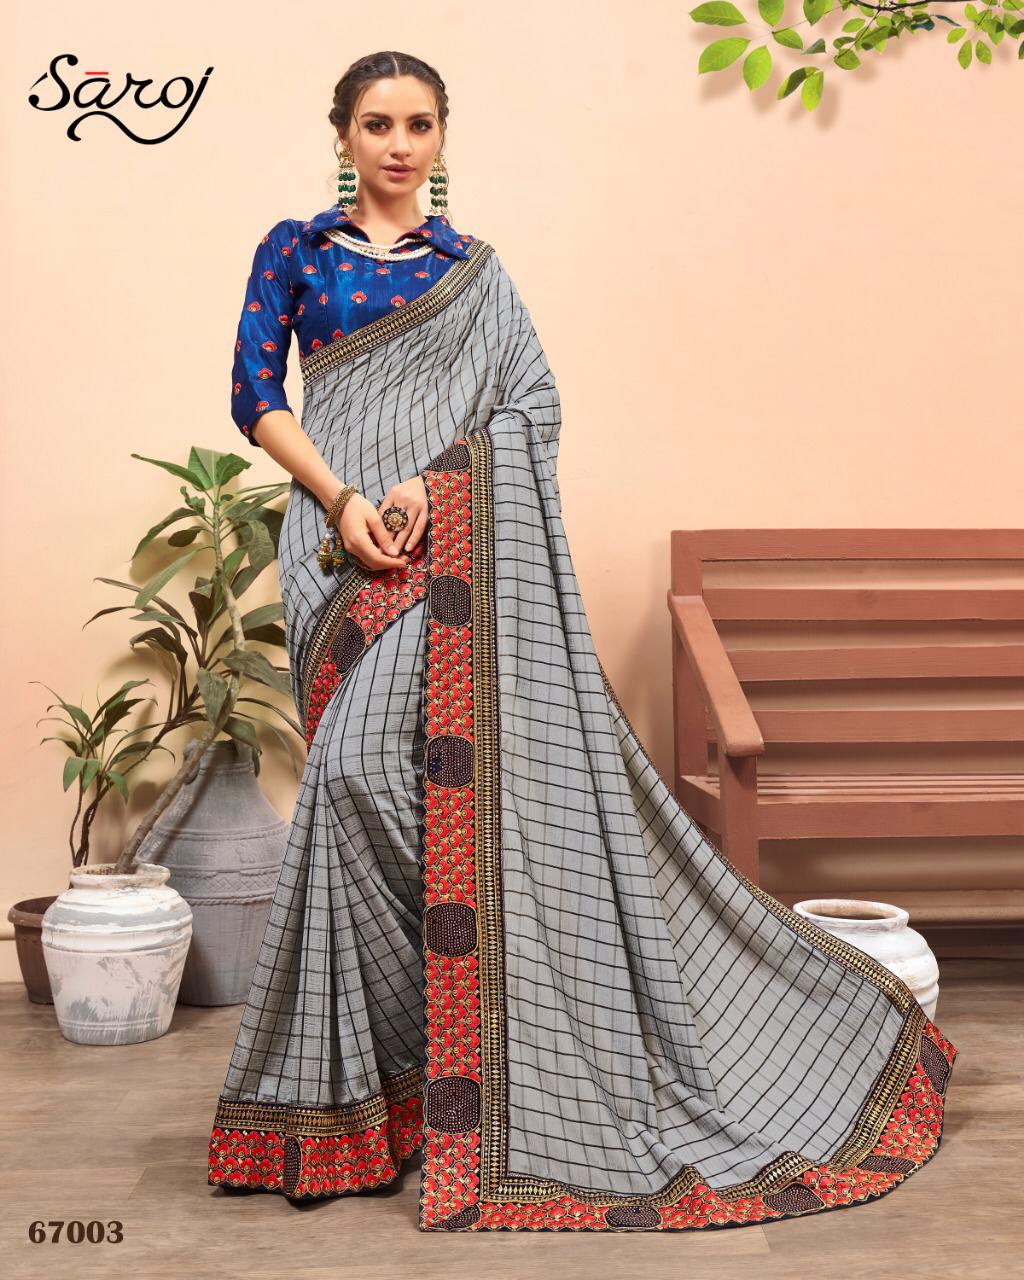 Saroj nakshita beautifully designed border sarees in factory price